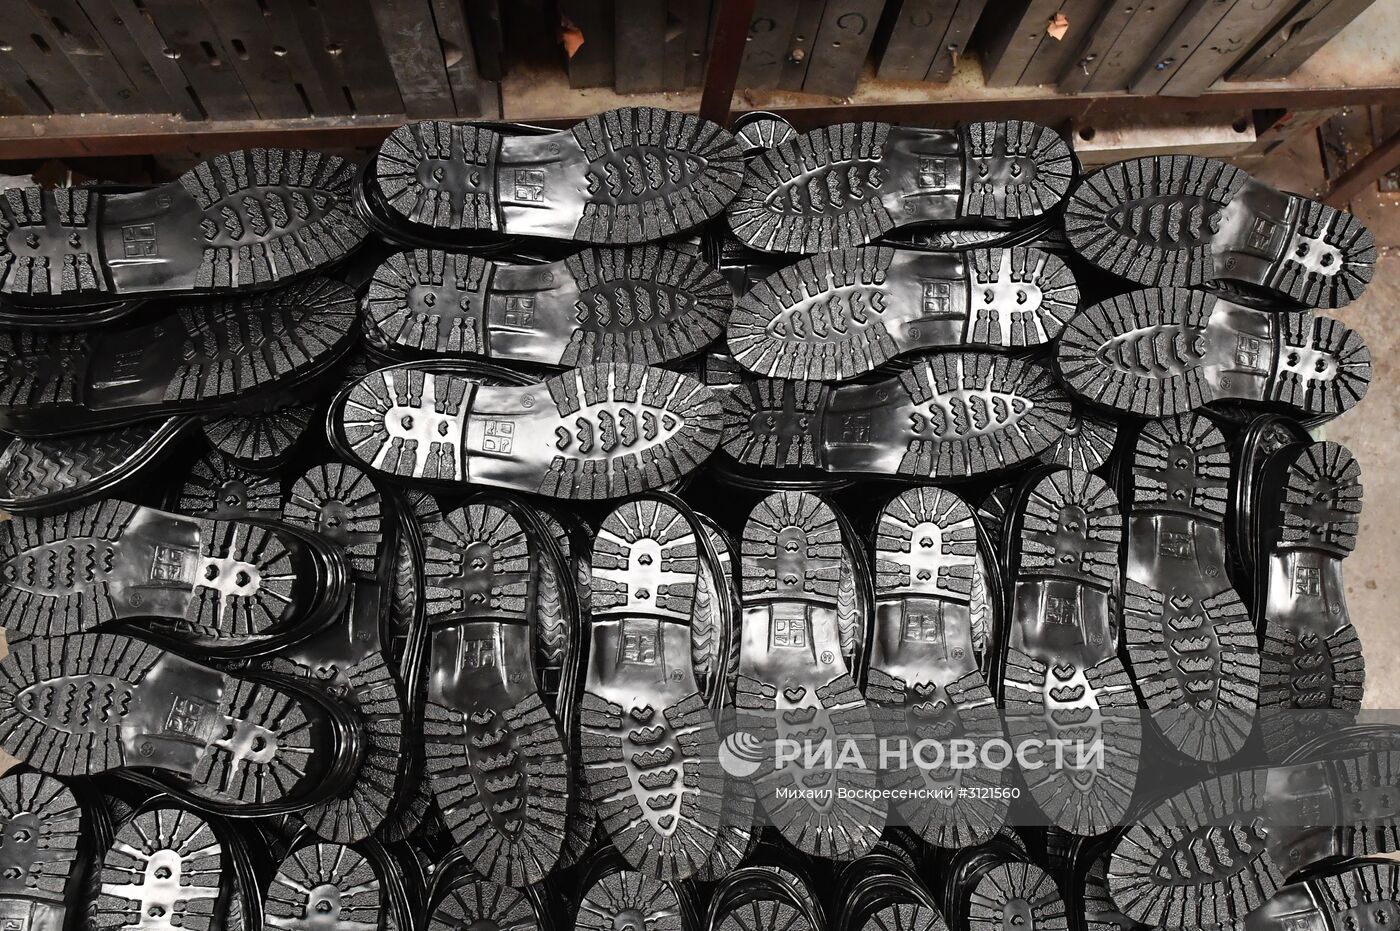 Обувная фабрика в сирийской провинции Хама